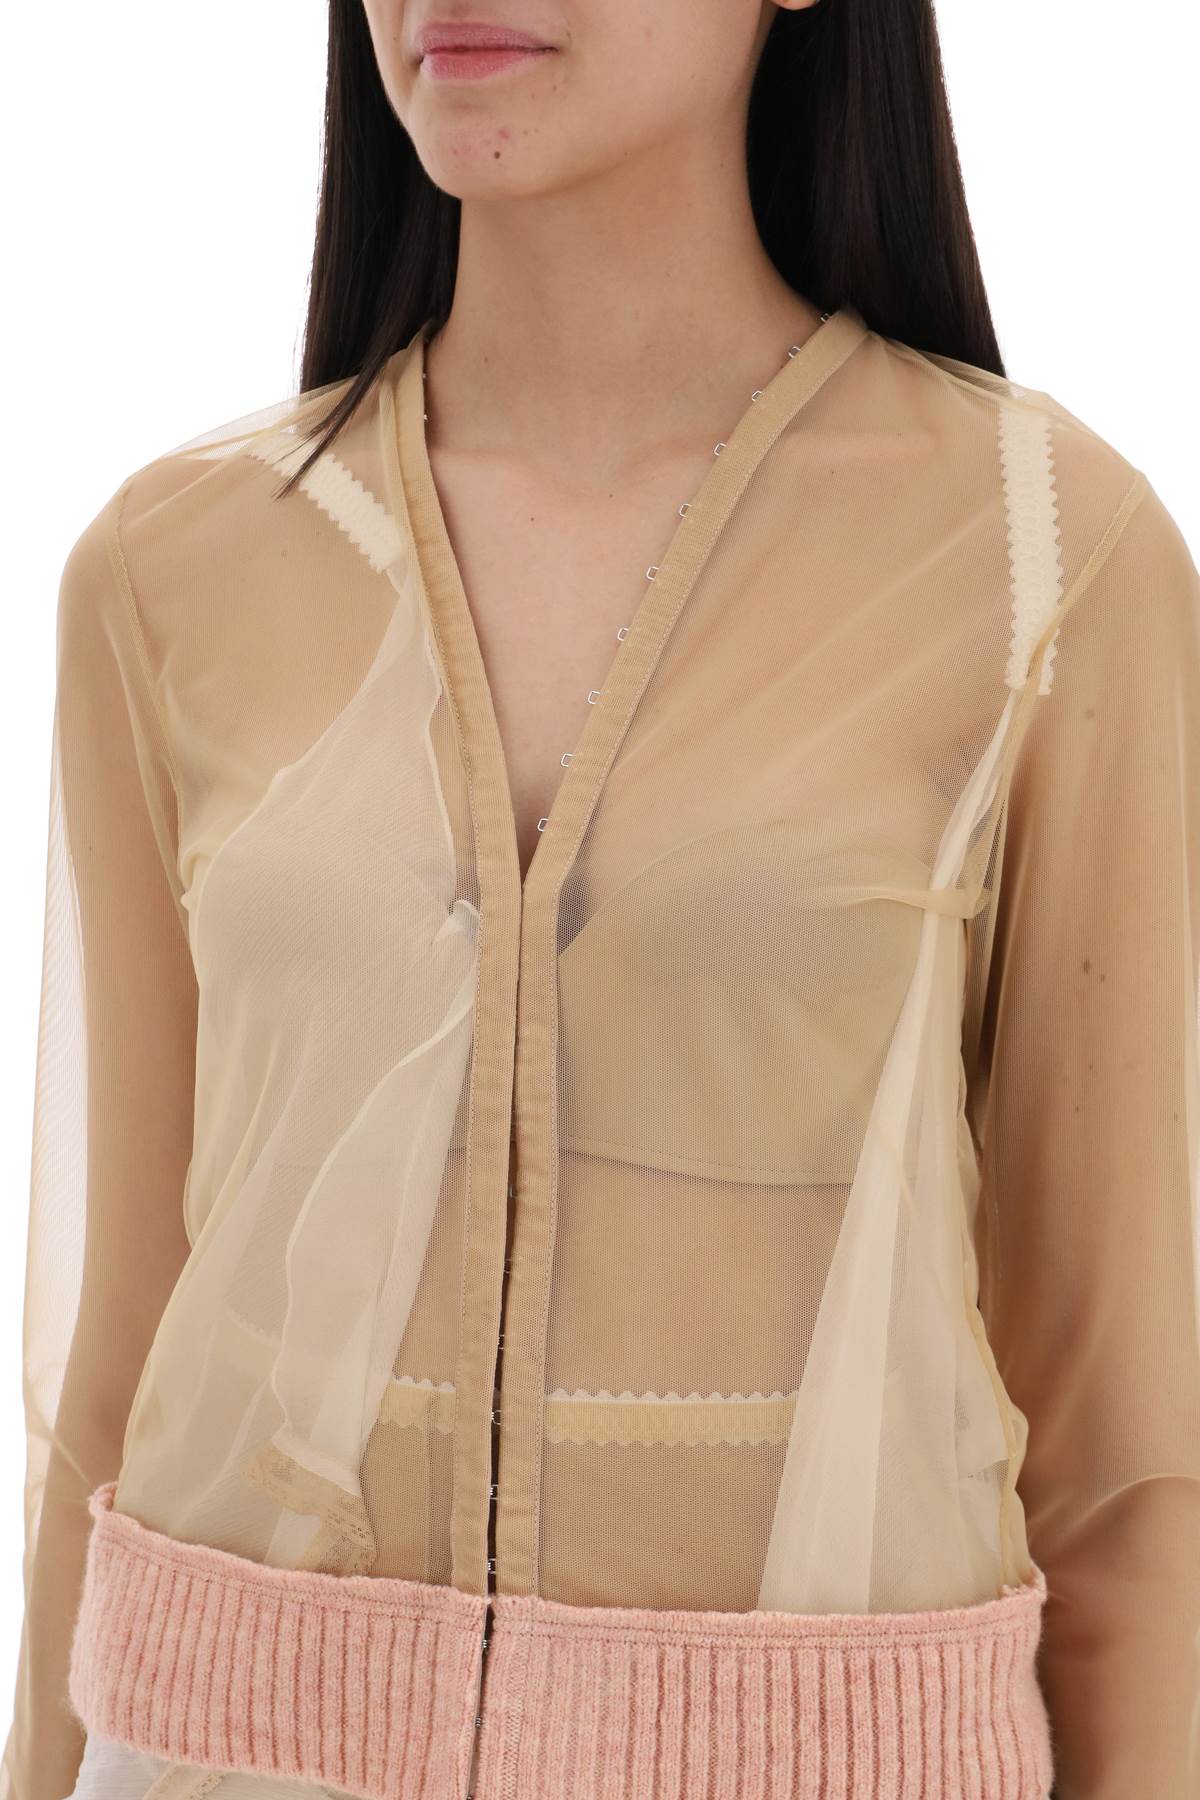 Dilara findikoglu transparent long-sleeved top for a stylish-3